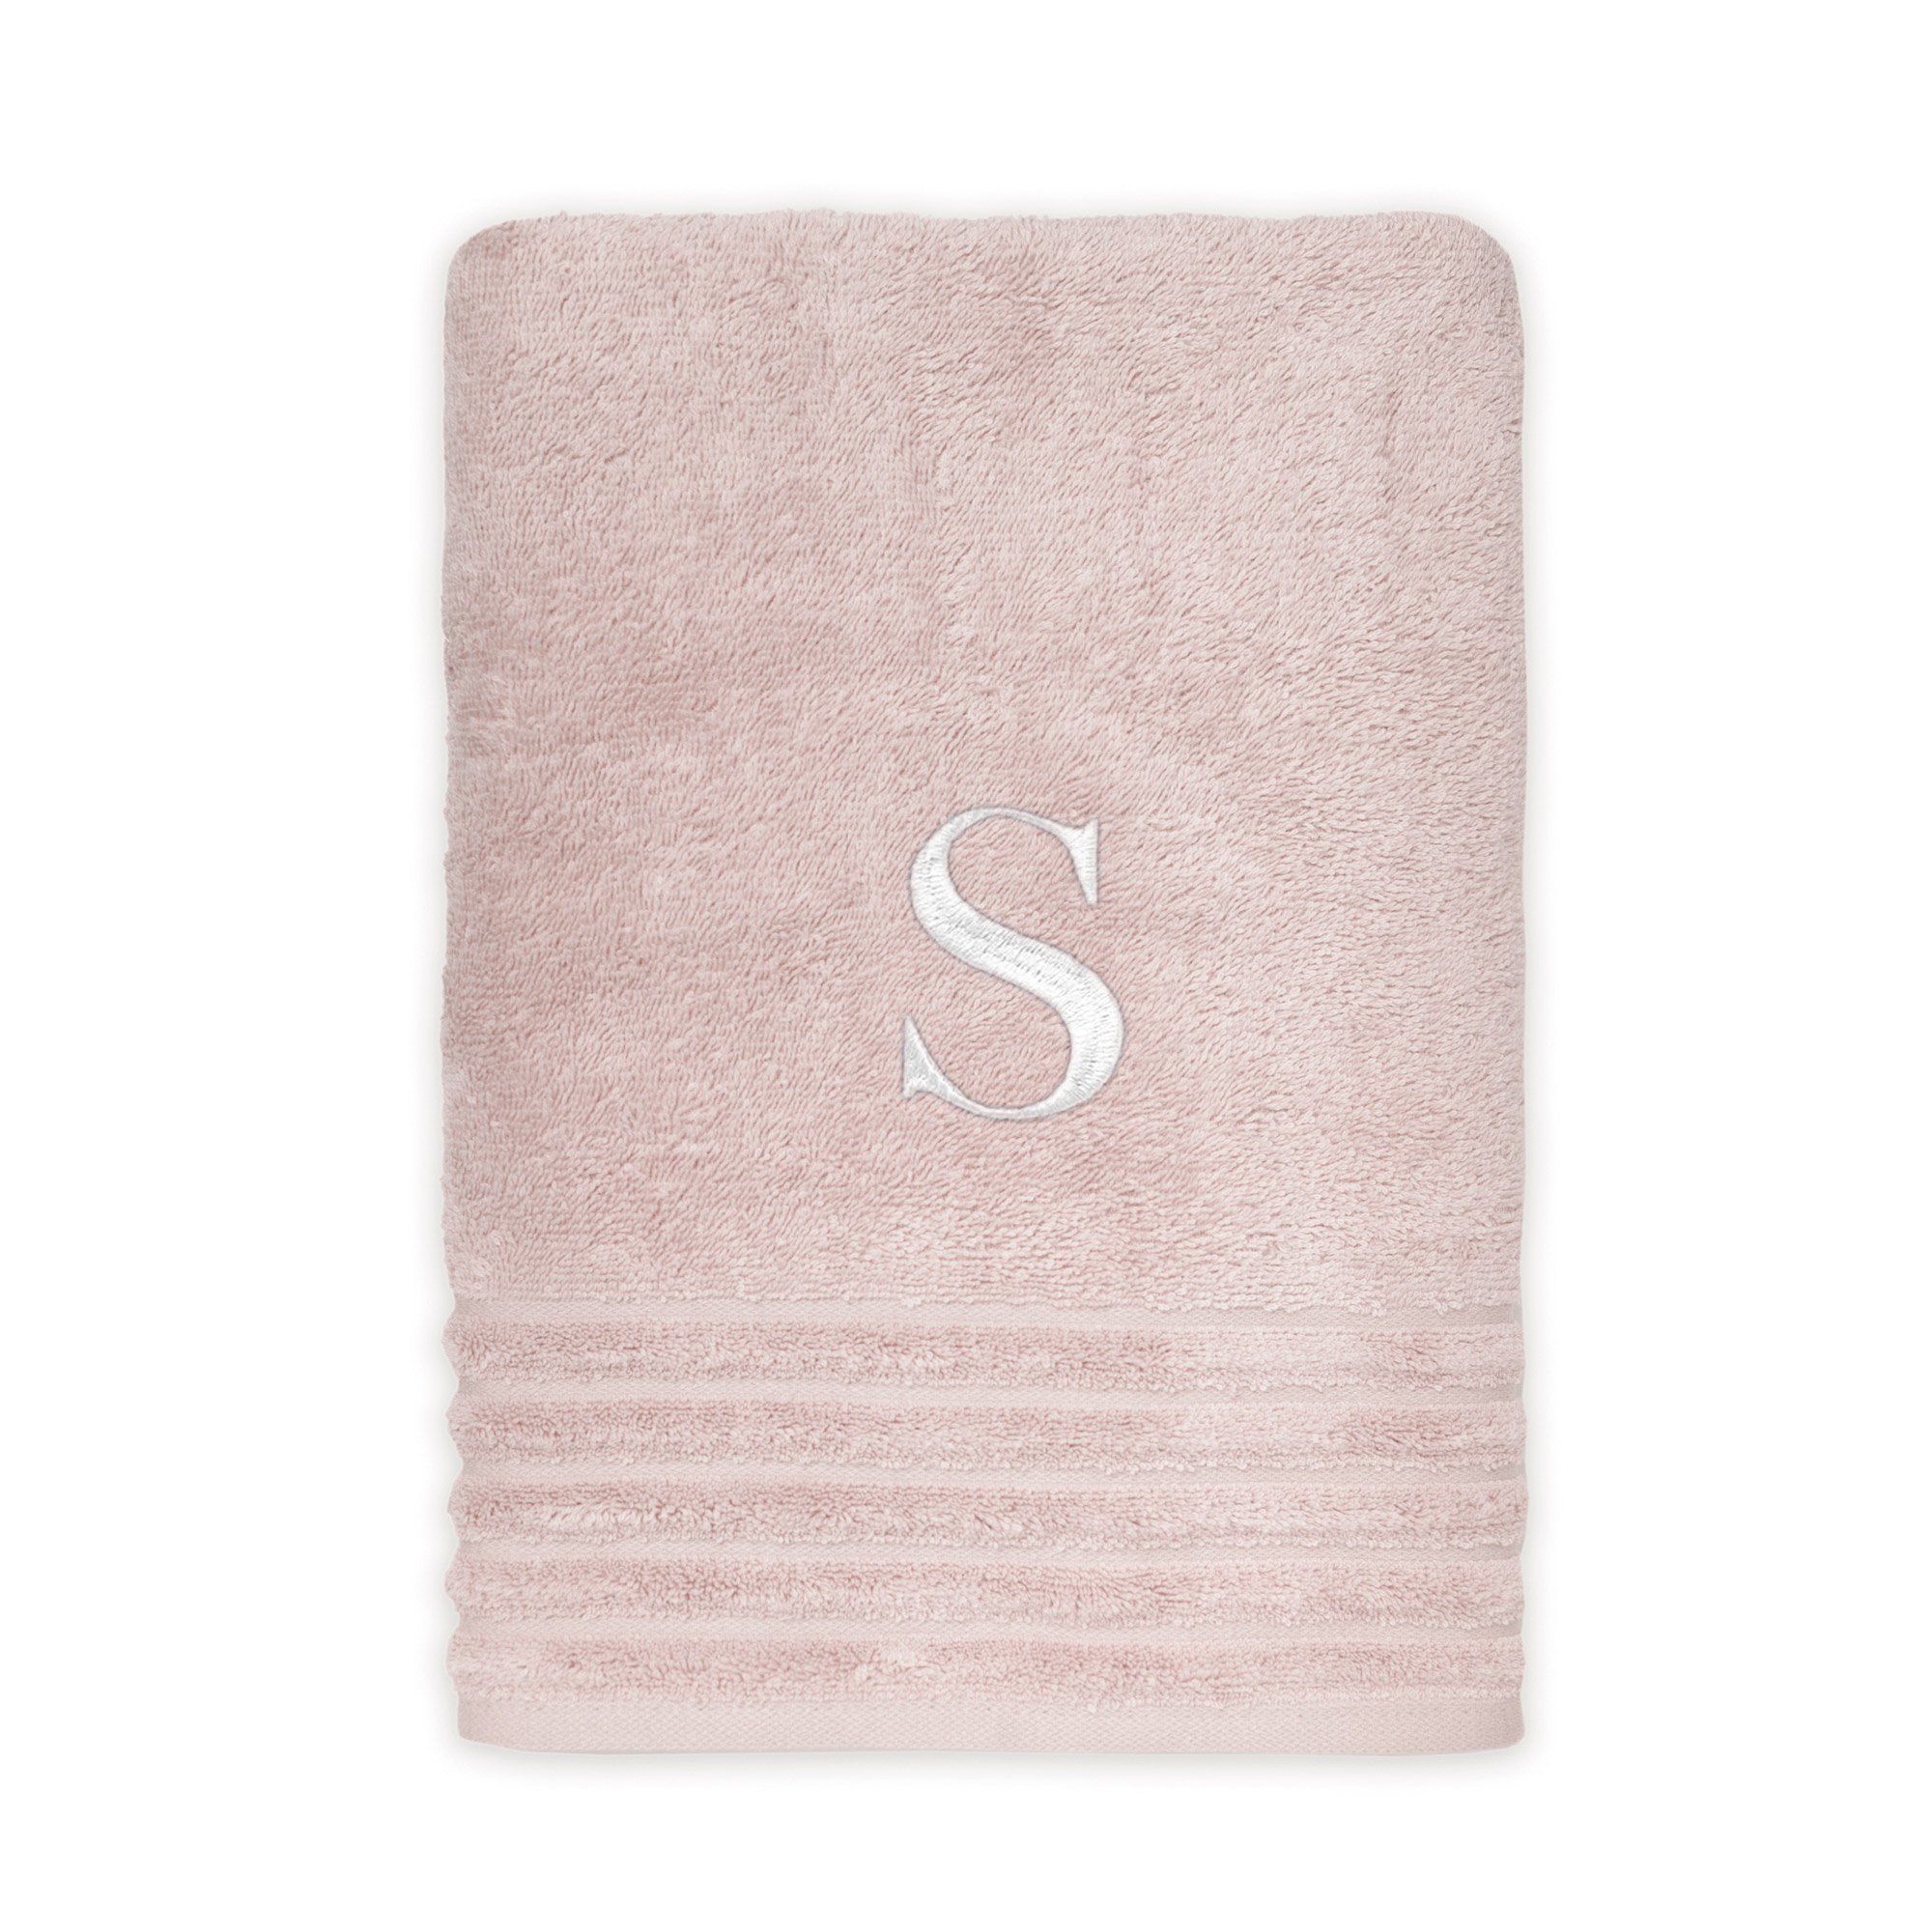 01 toalha de banho trussardi imperiale soft rose